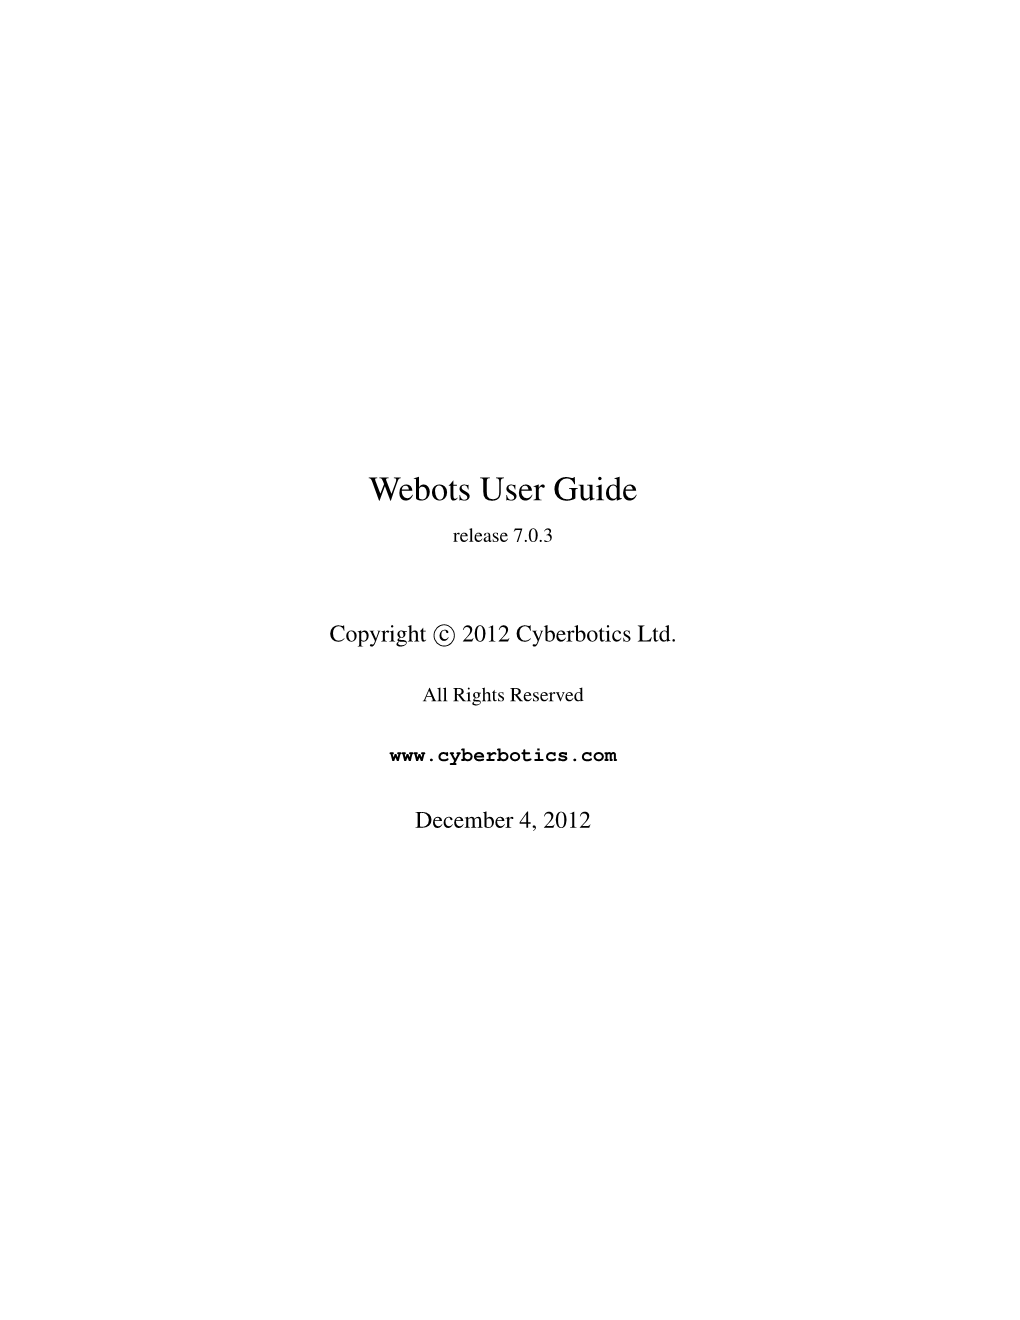 Webots User Guide Release 7.0.3